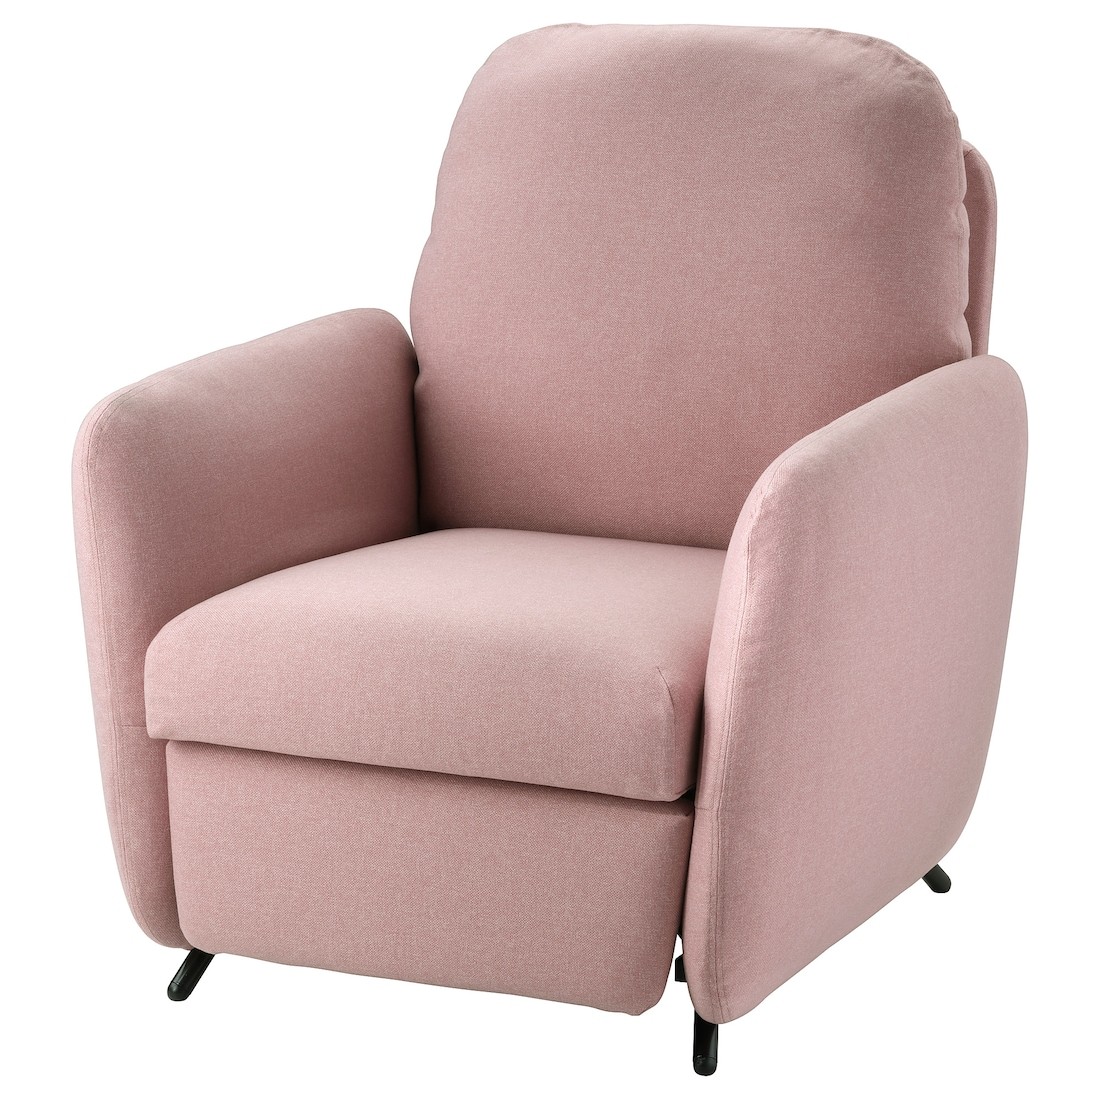 IKEA EKOLSUND ЭКОЛСУНД Чехол раскладного кресла, Gunnared светло-розовый 30442662 | 304.426.62